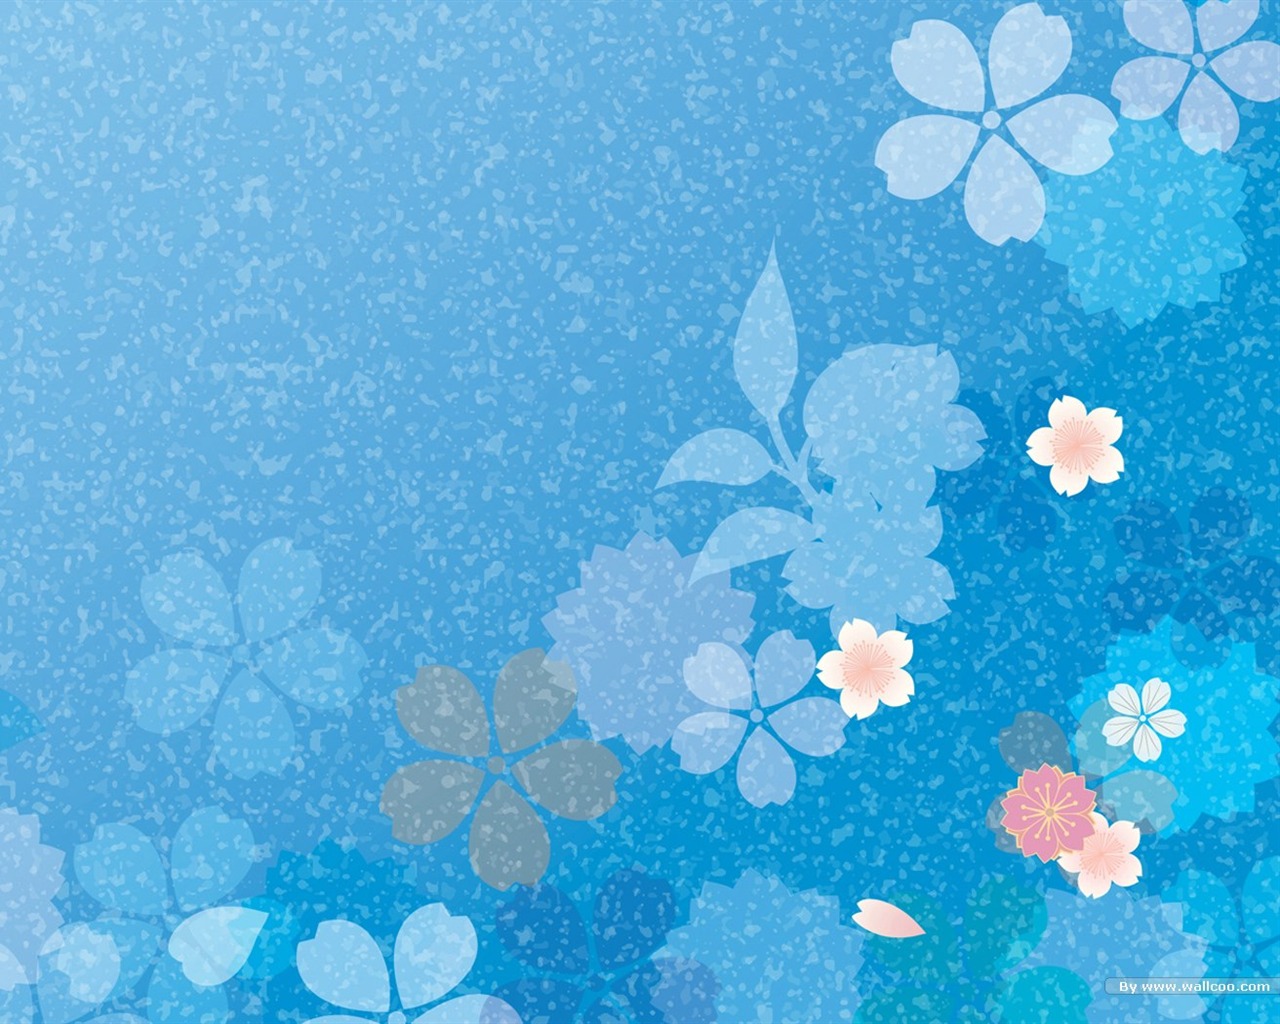 Japan-Stil Tapete Muster und Farbe #6 - 1280x1024